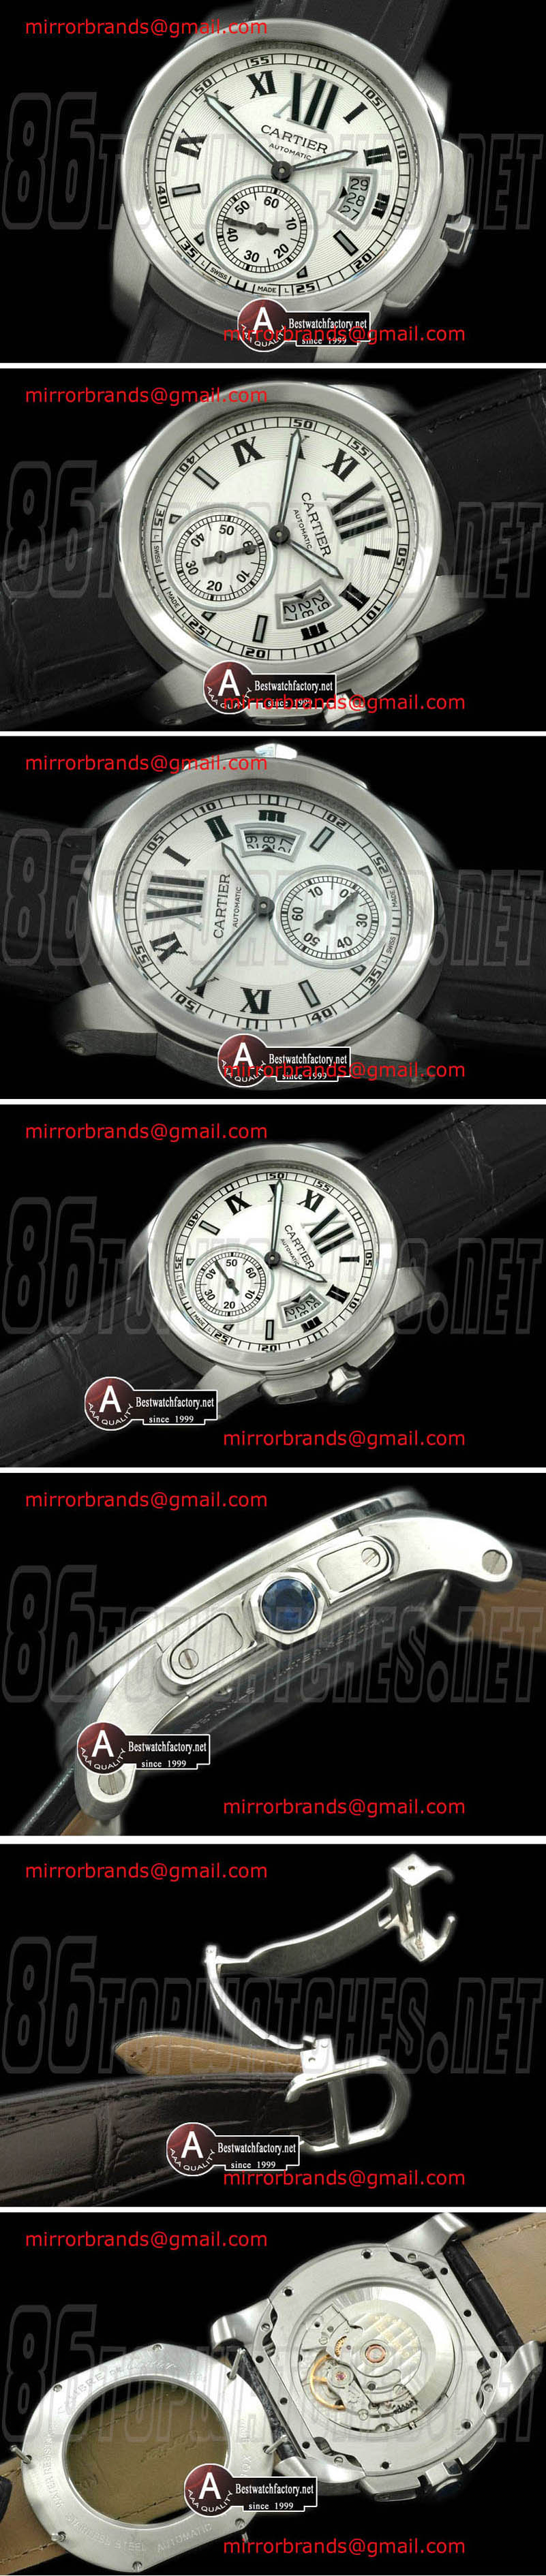 Luxury Cartier Calibre de Cartier W7100013 SS/Leather White Asian 2824 28800bph